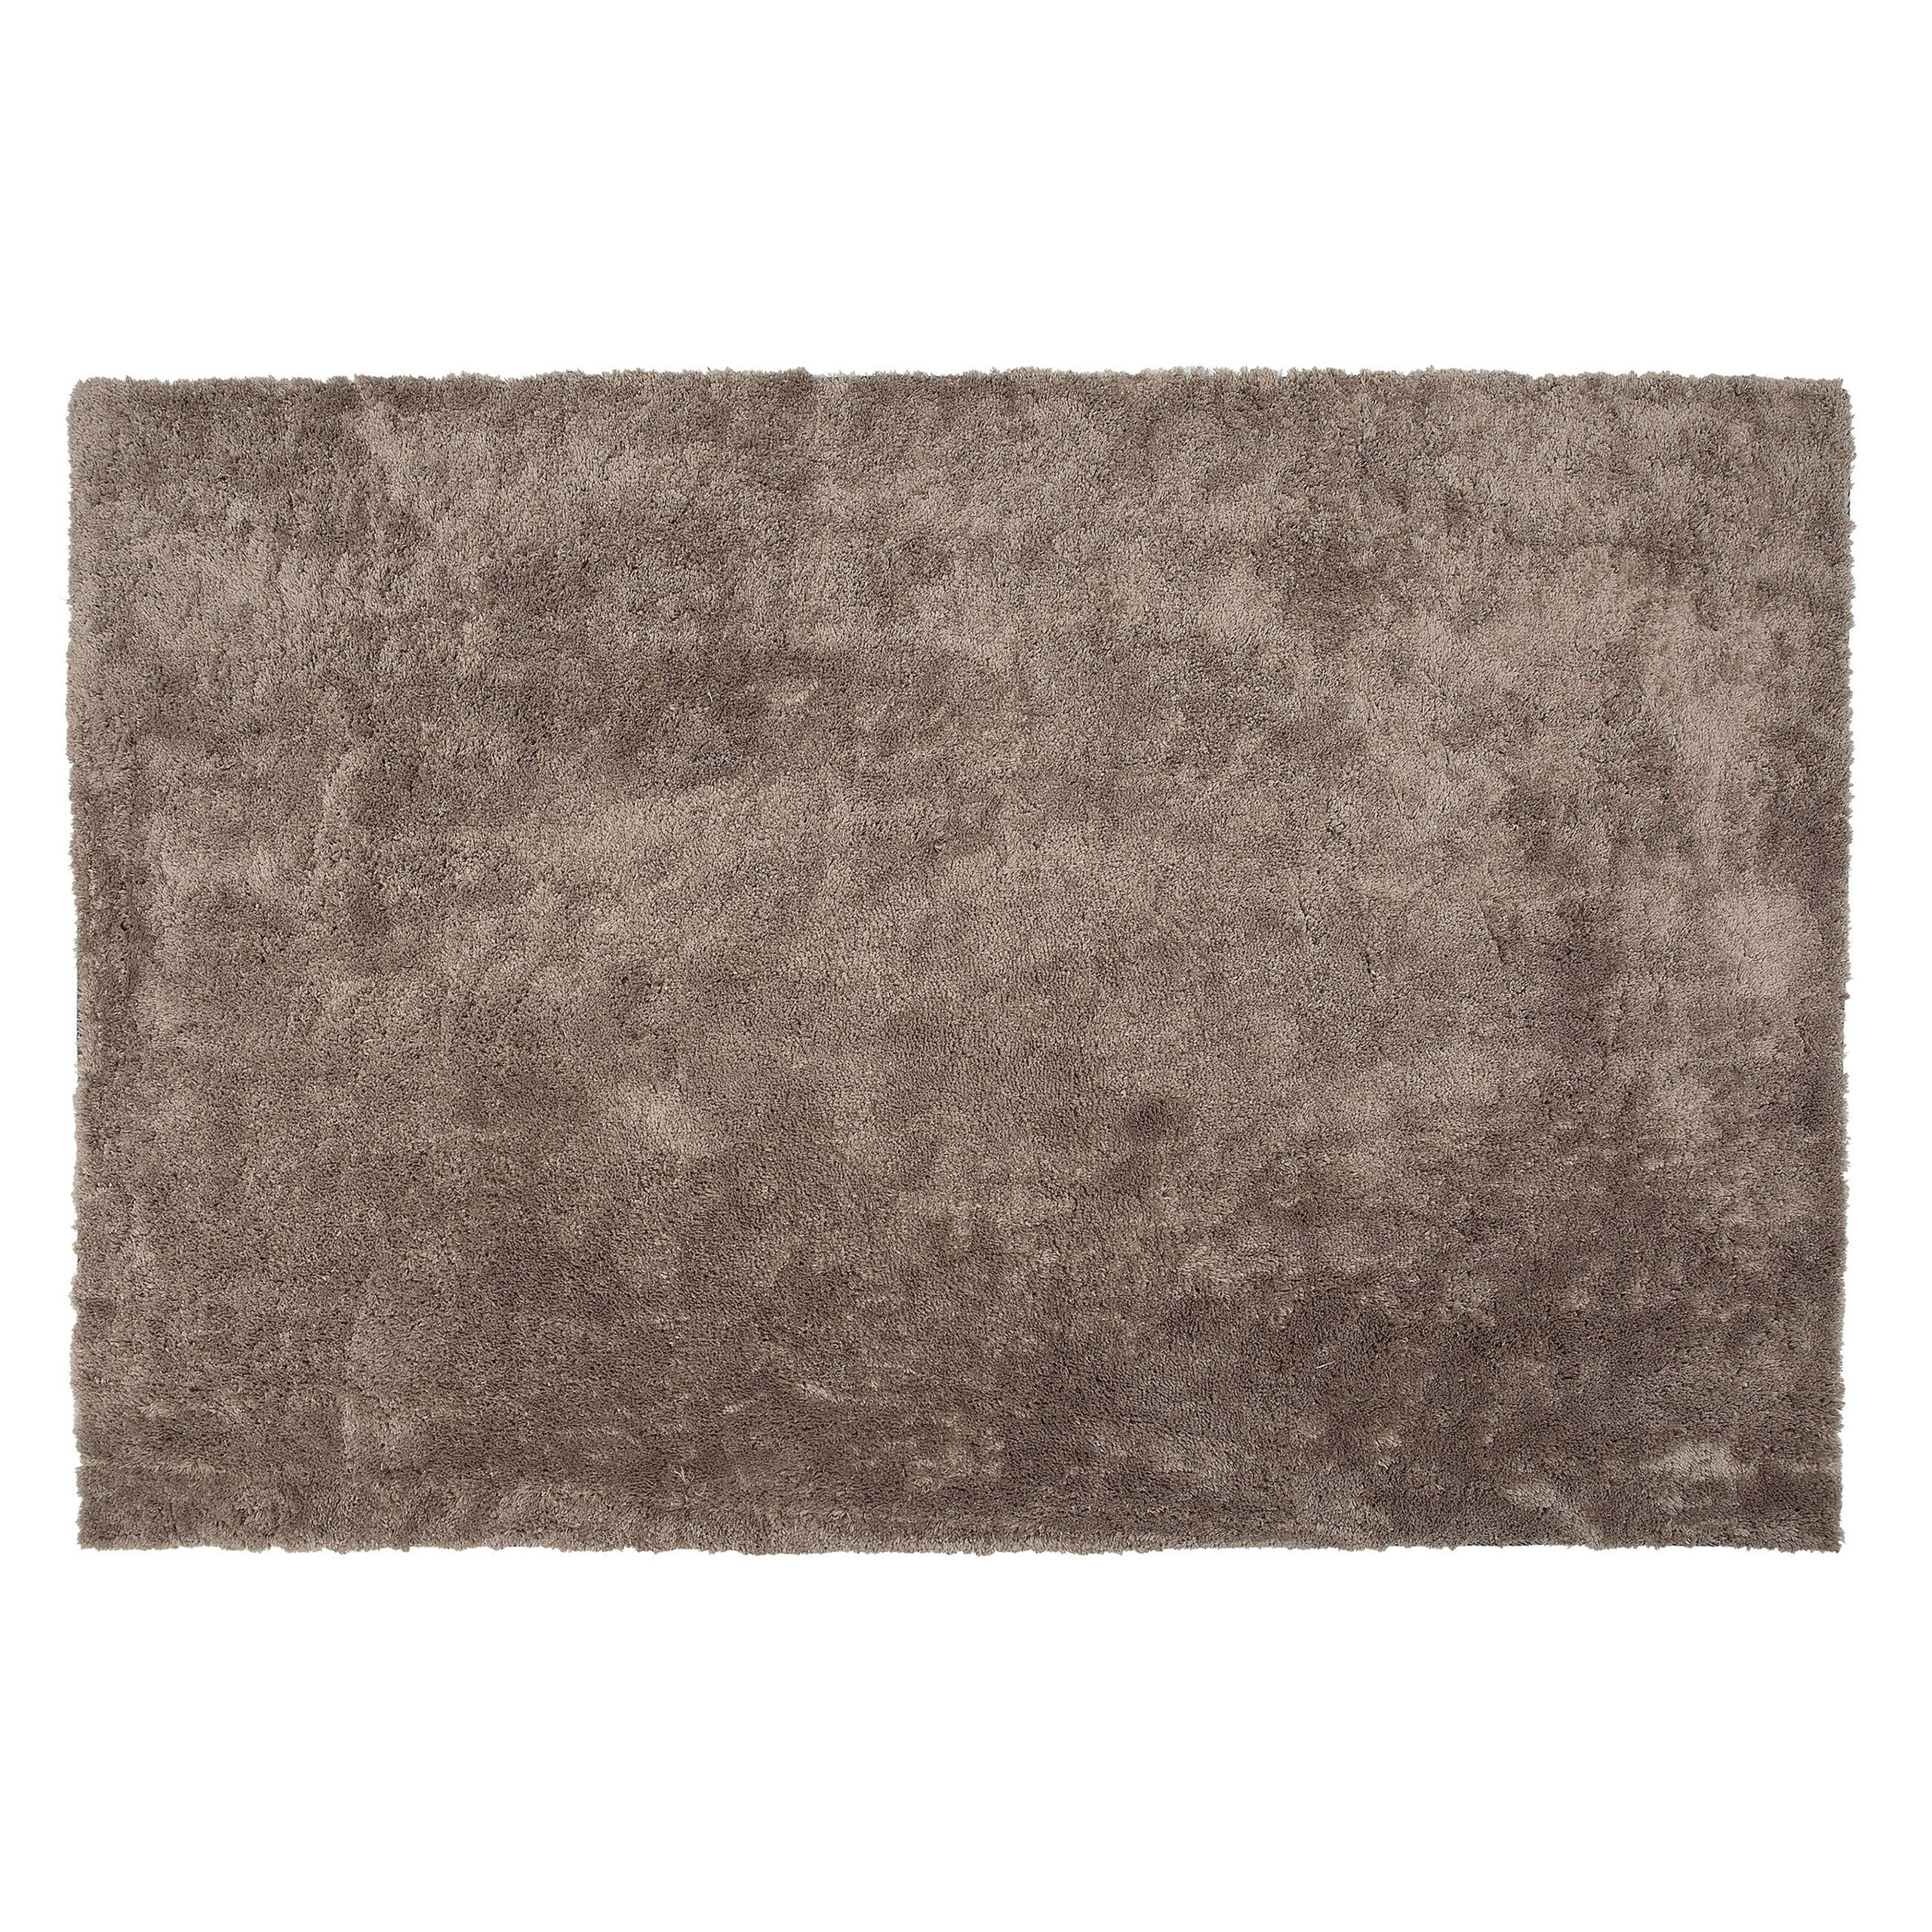 Beliani Shaggy Area Rug Light Brown Cotton Polyester Blend 140 x 200 cm Fluffy Dense Pile